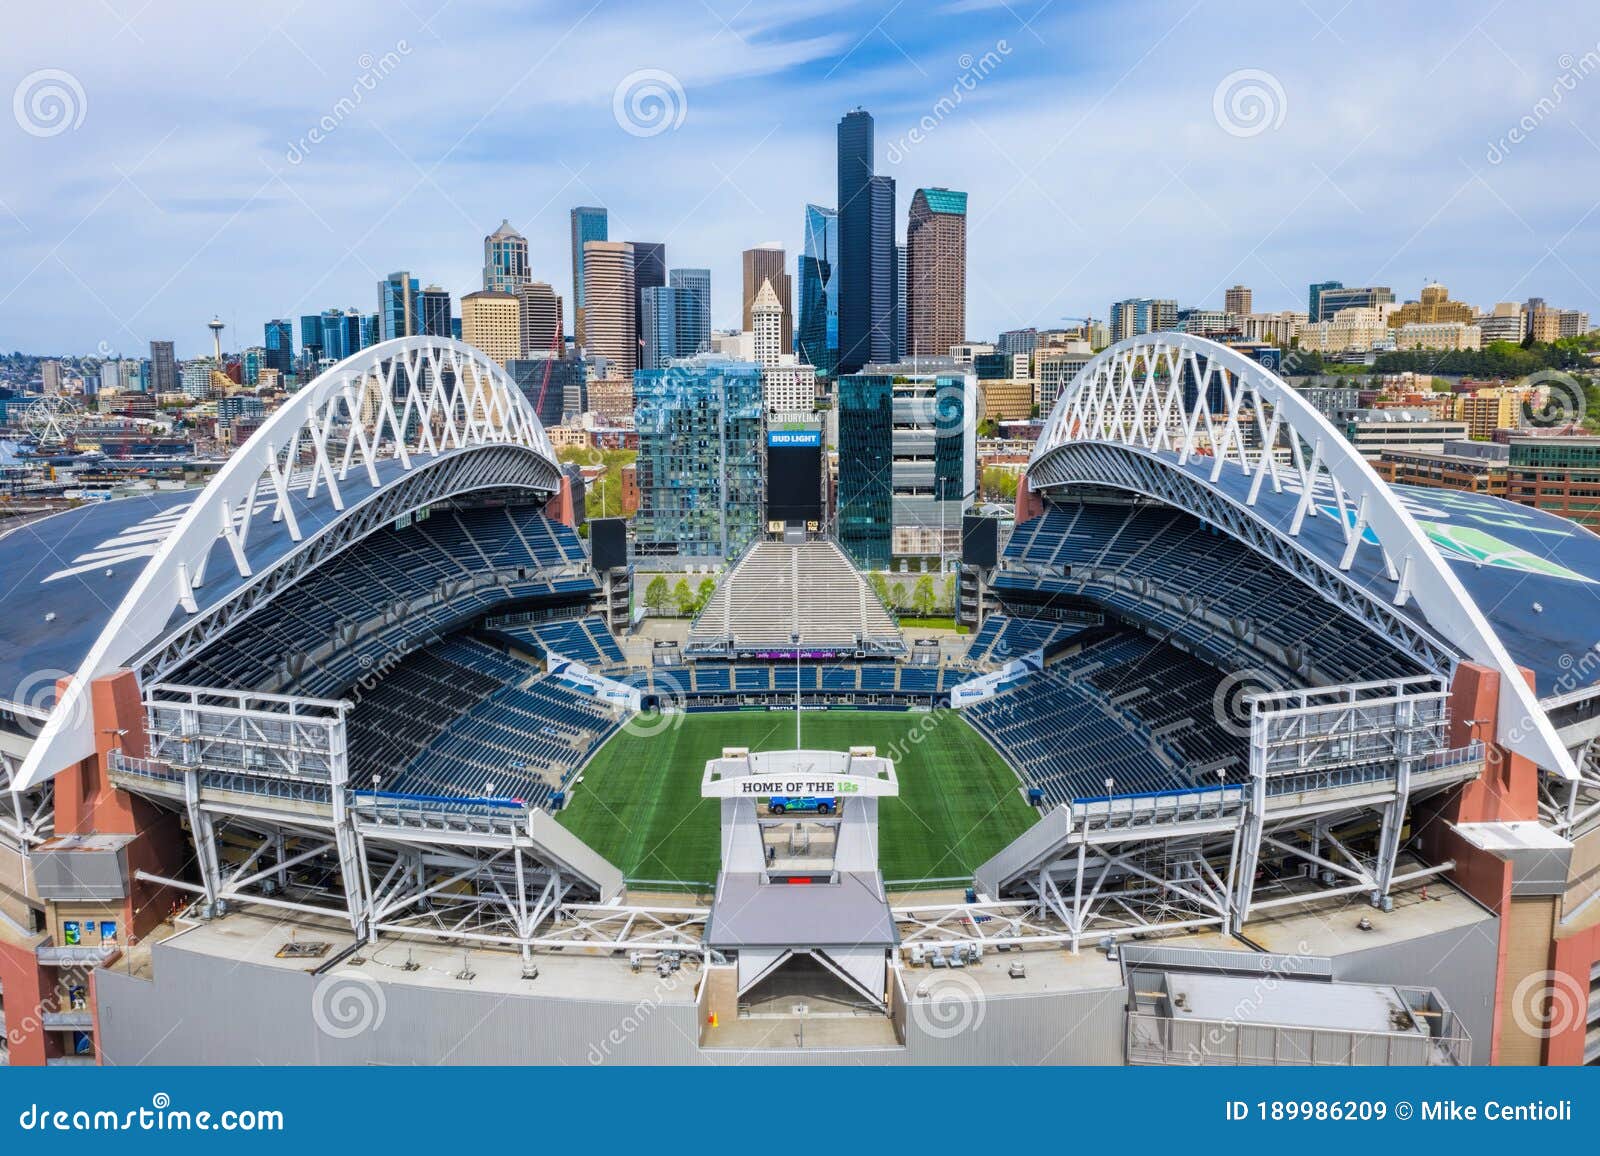 seattle seahawks stadium design